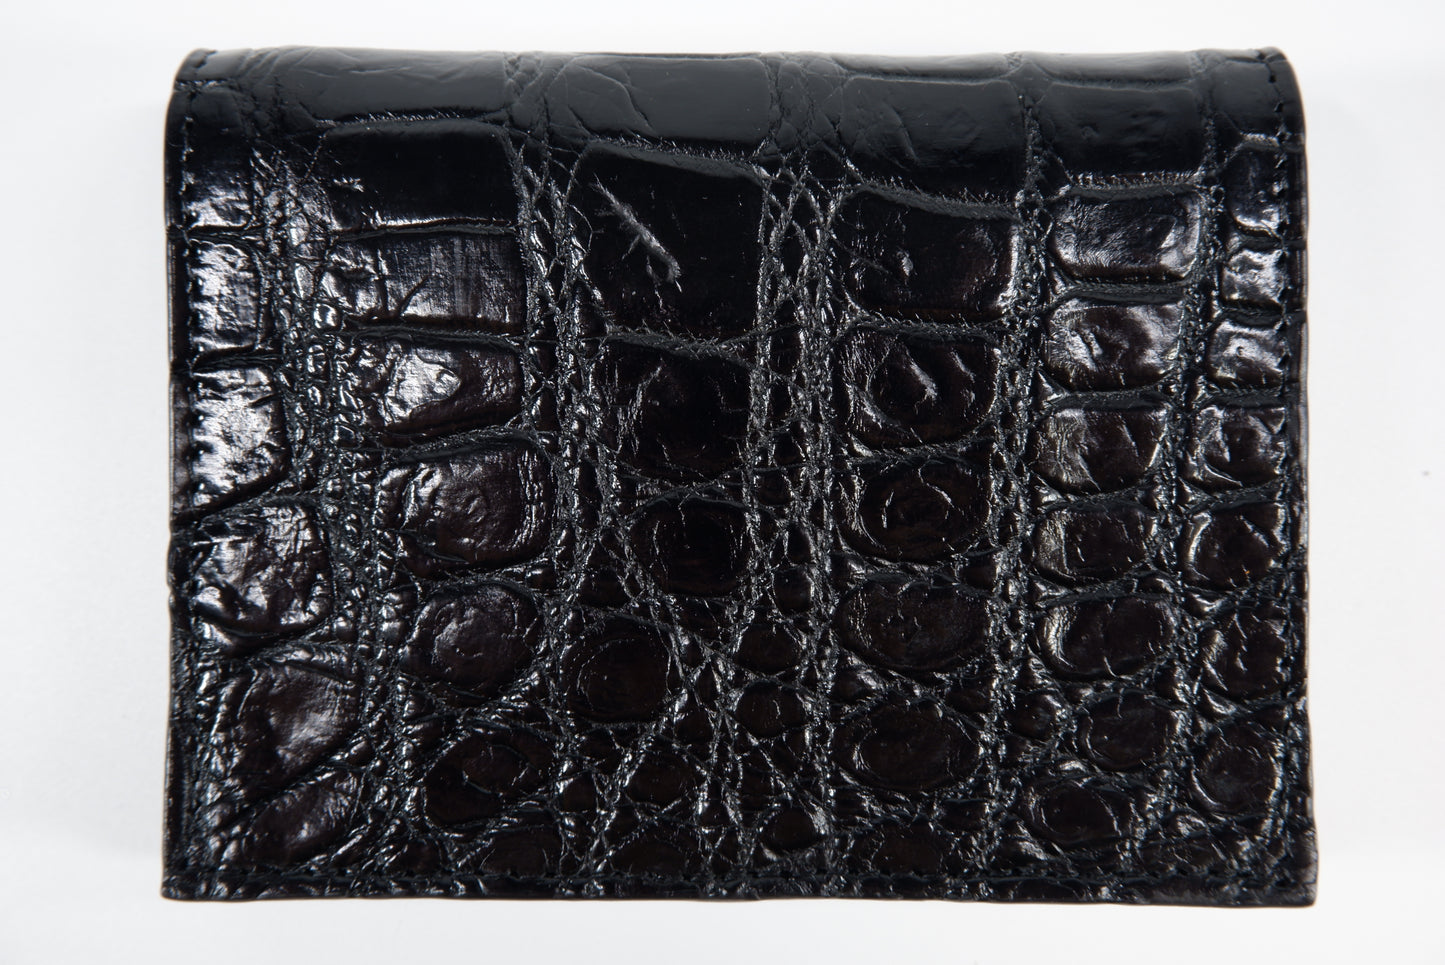 Genuine Crocodile Belly Skin Leather Business & Credit Card Holder Wallet